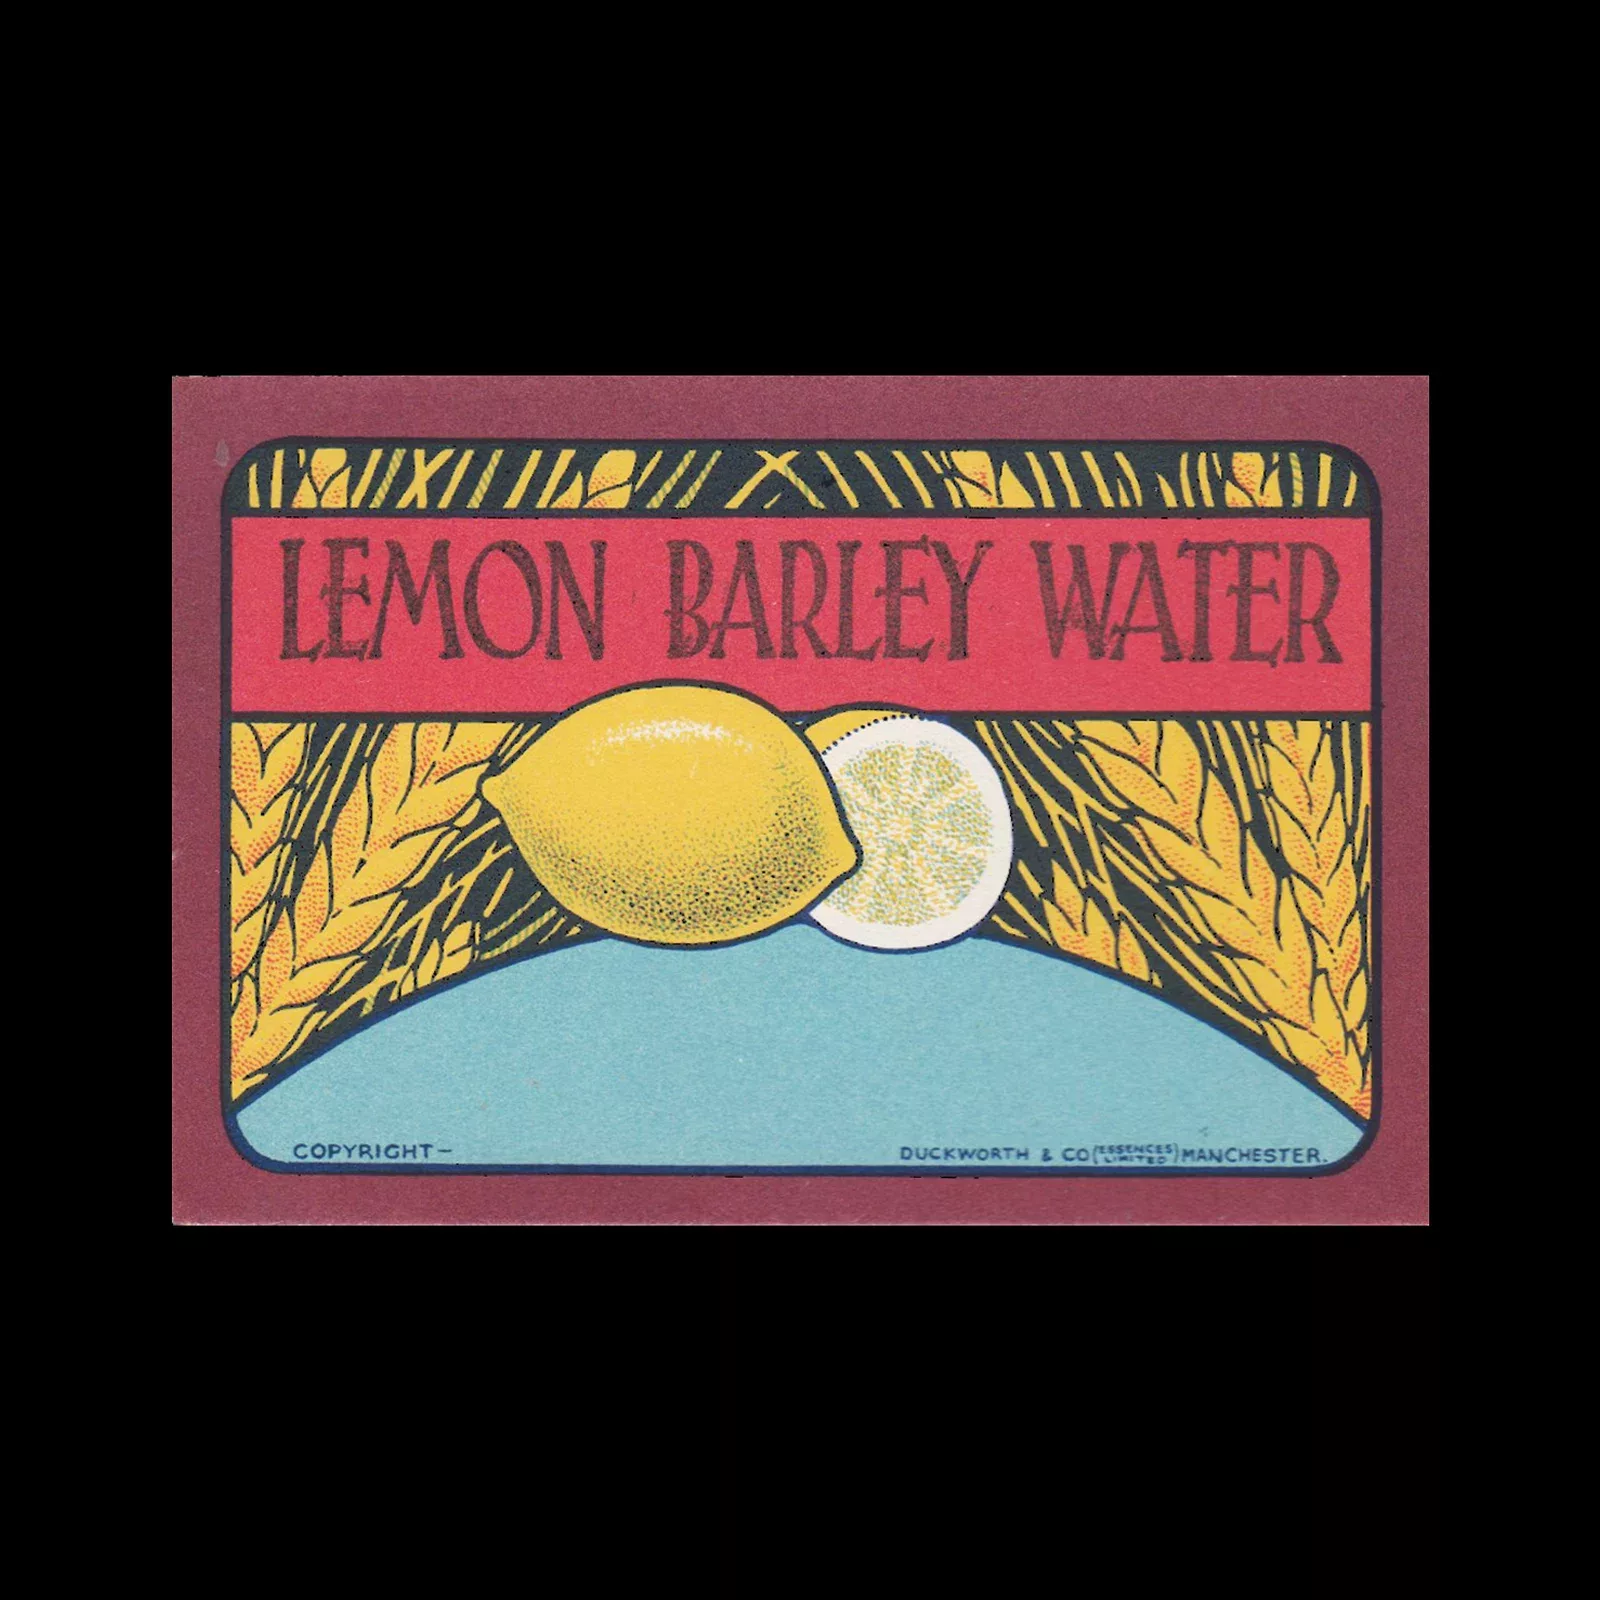 Lemon Barley Water, Fruit Drink Label